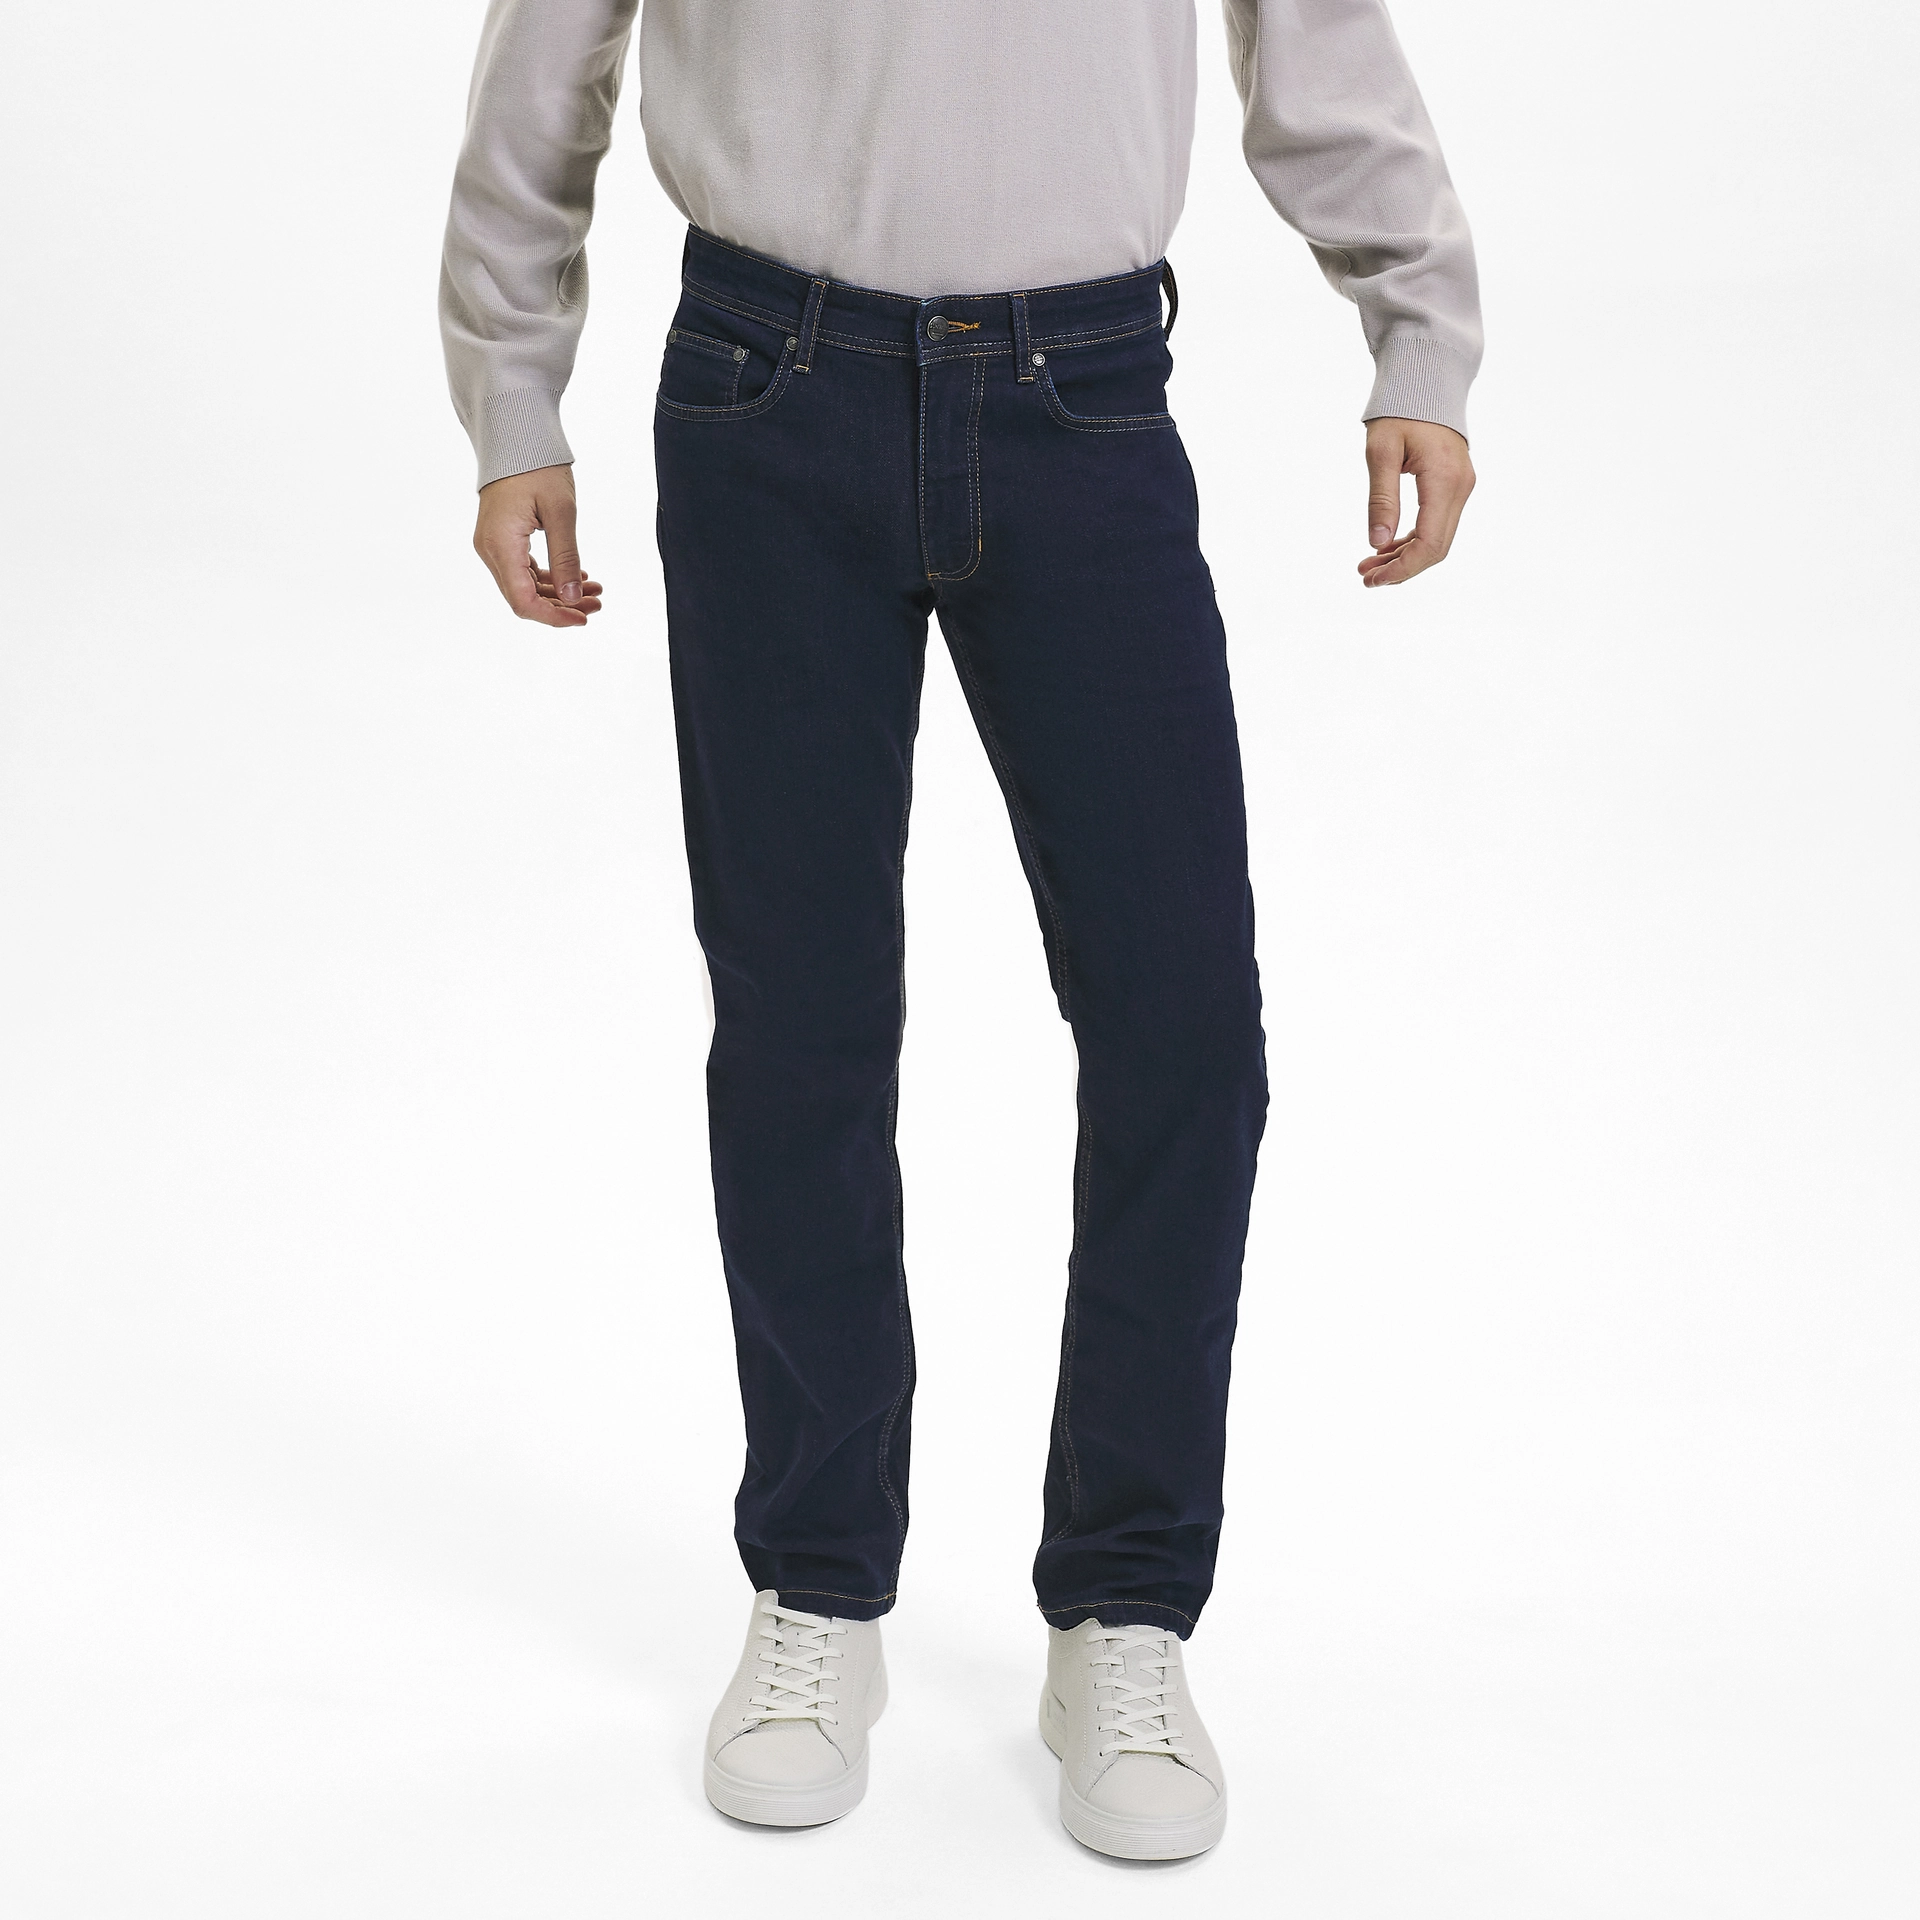 Jeans in Regular Fit